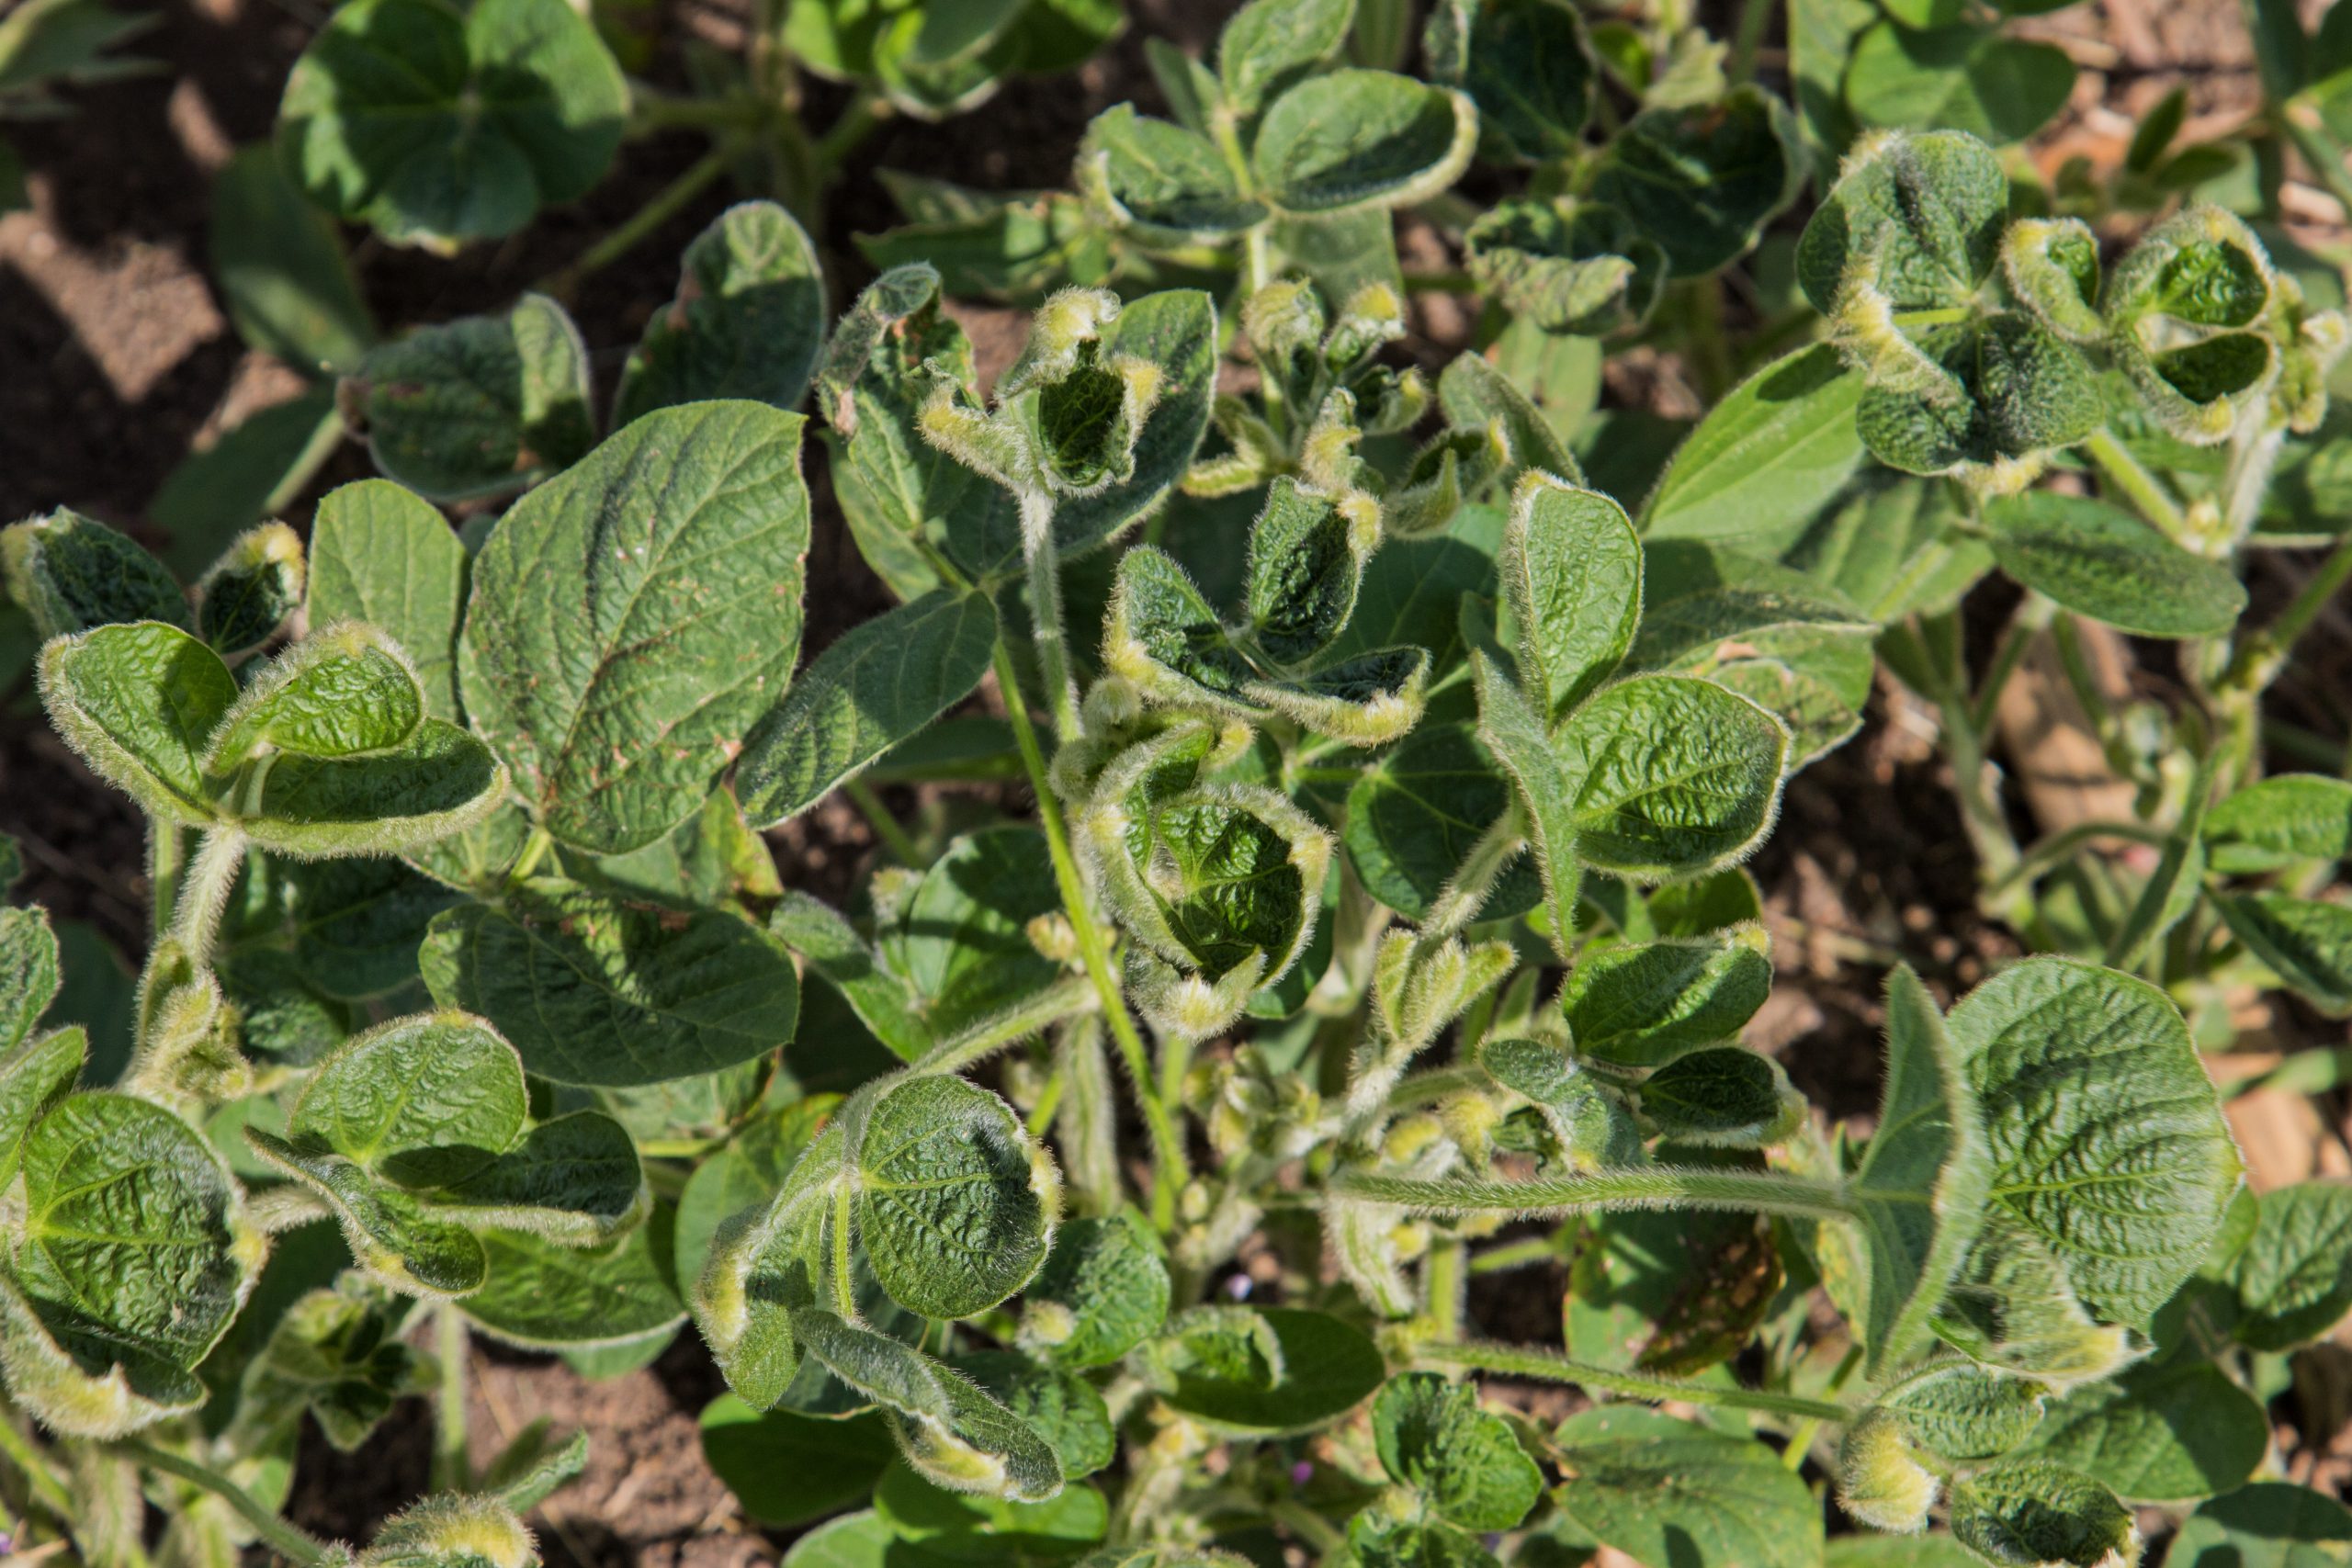 Dicamba damaged soybean plants